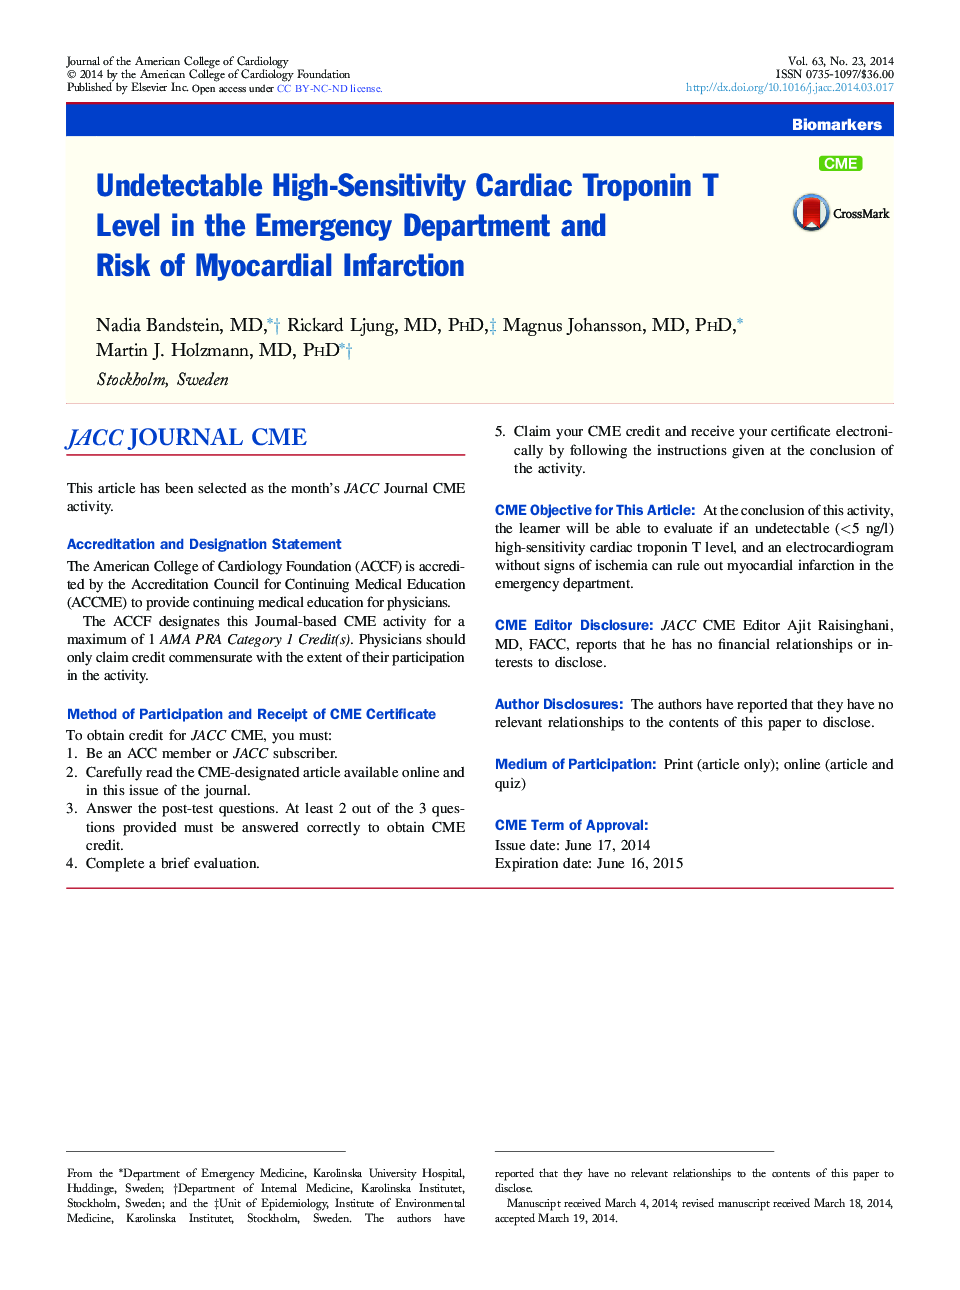 Undetectable High-Sensitivity Cardiac Troponin T LevelÂ in the EmergencyÂ DepartmentÂ and RiskÂ ofÂ Myocardial Infarction